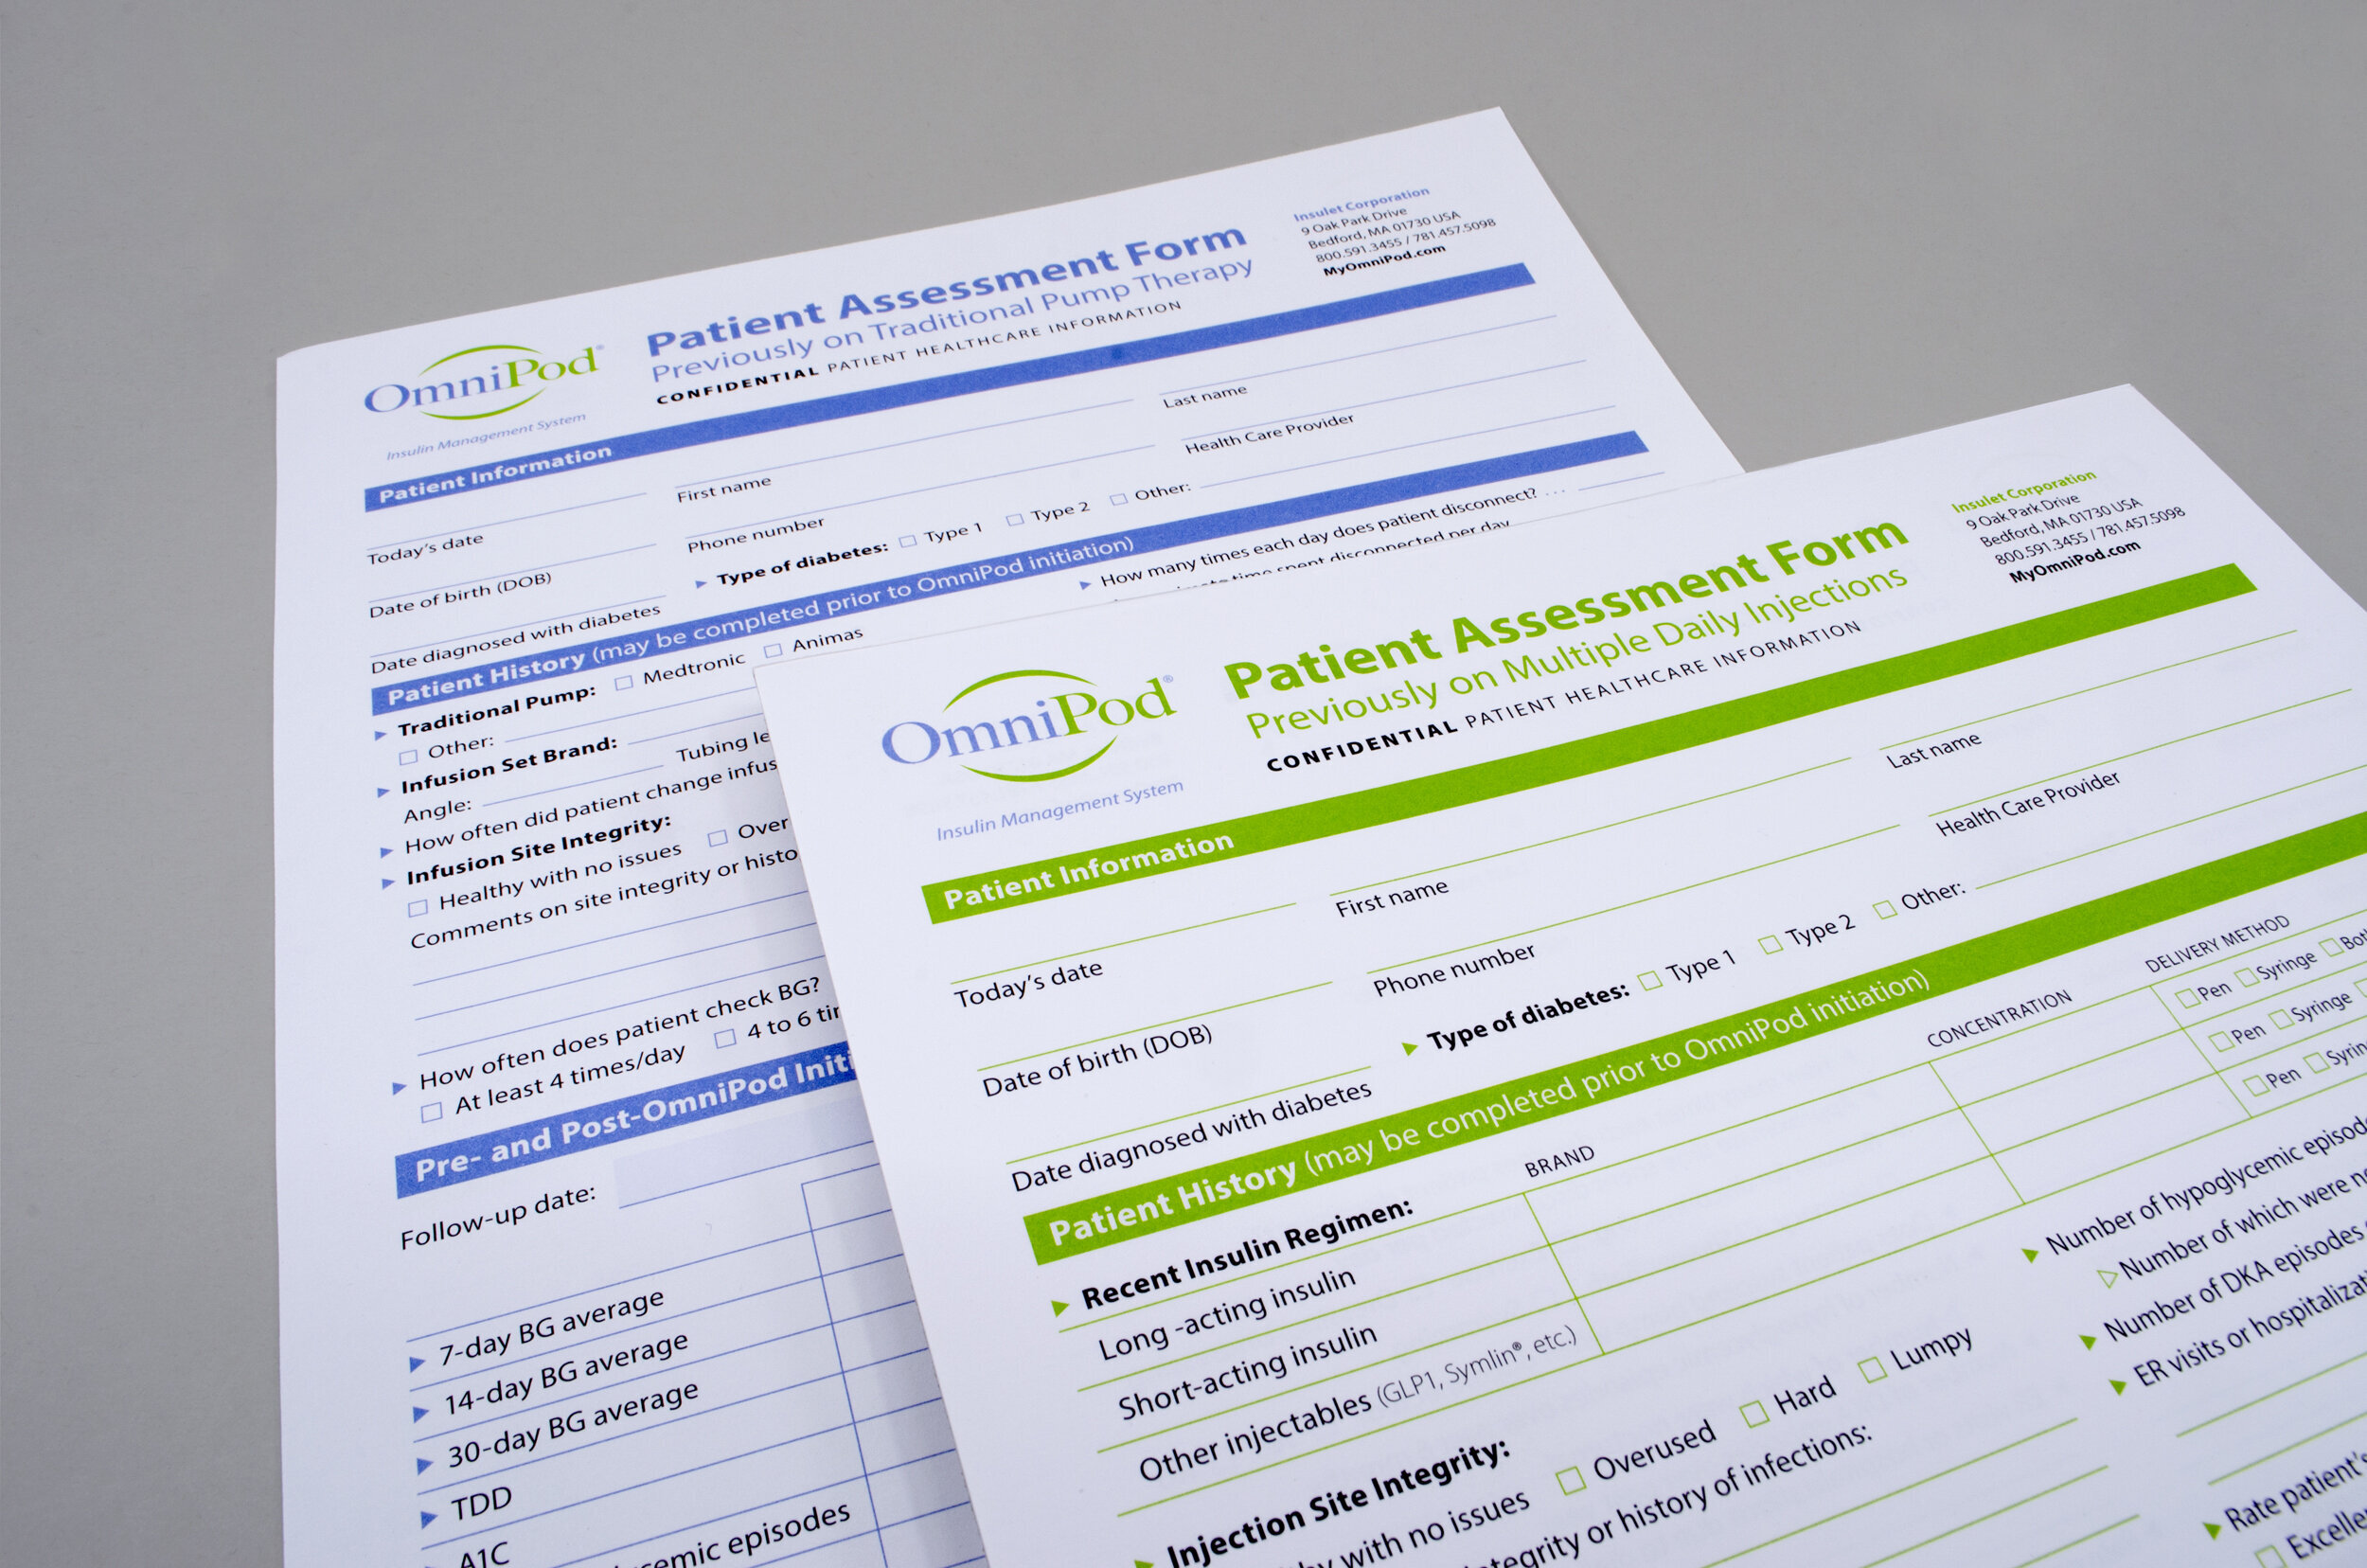   OmniPod Patient Assessment Form  • detail 